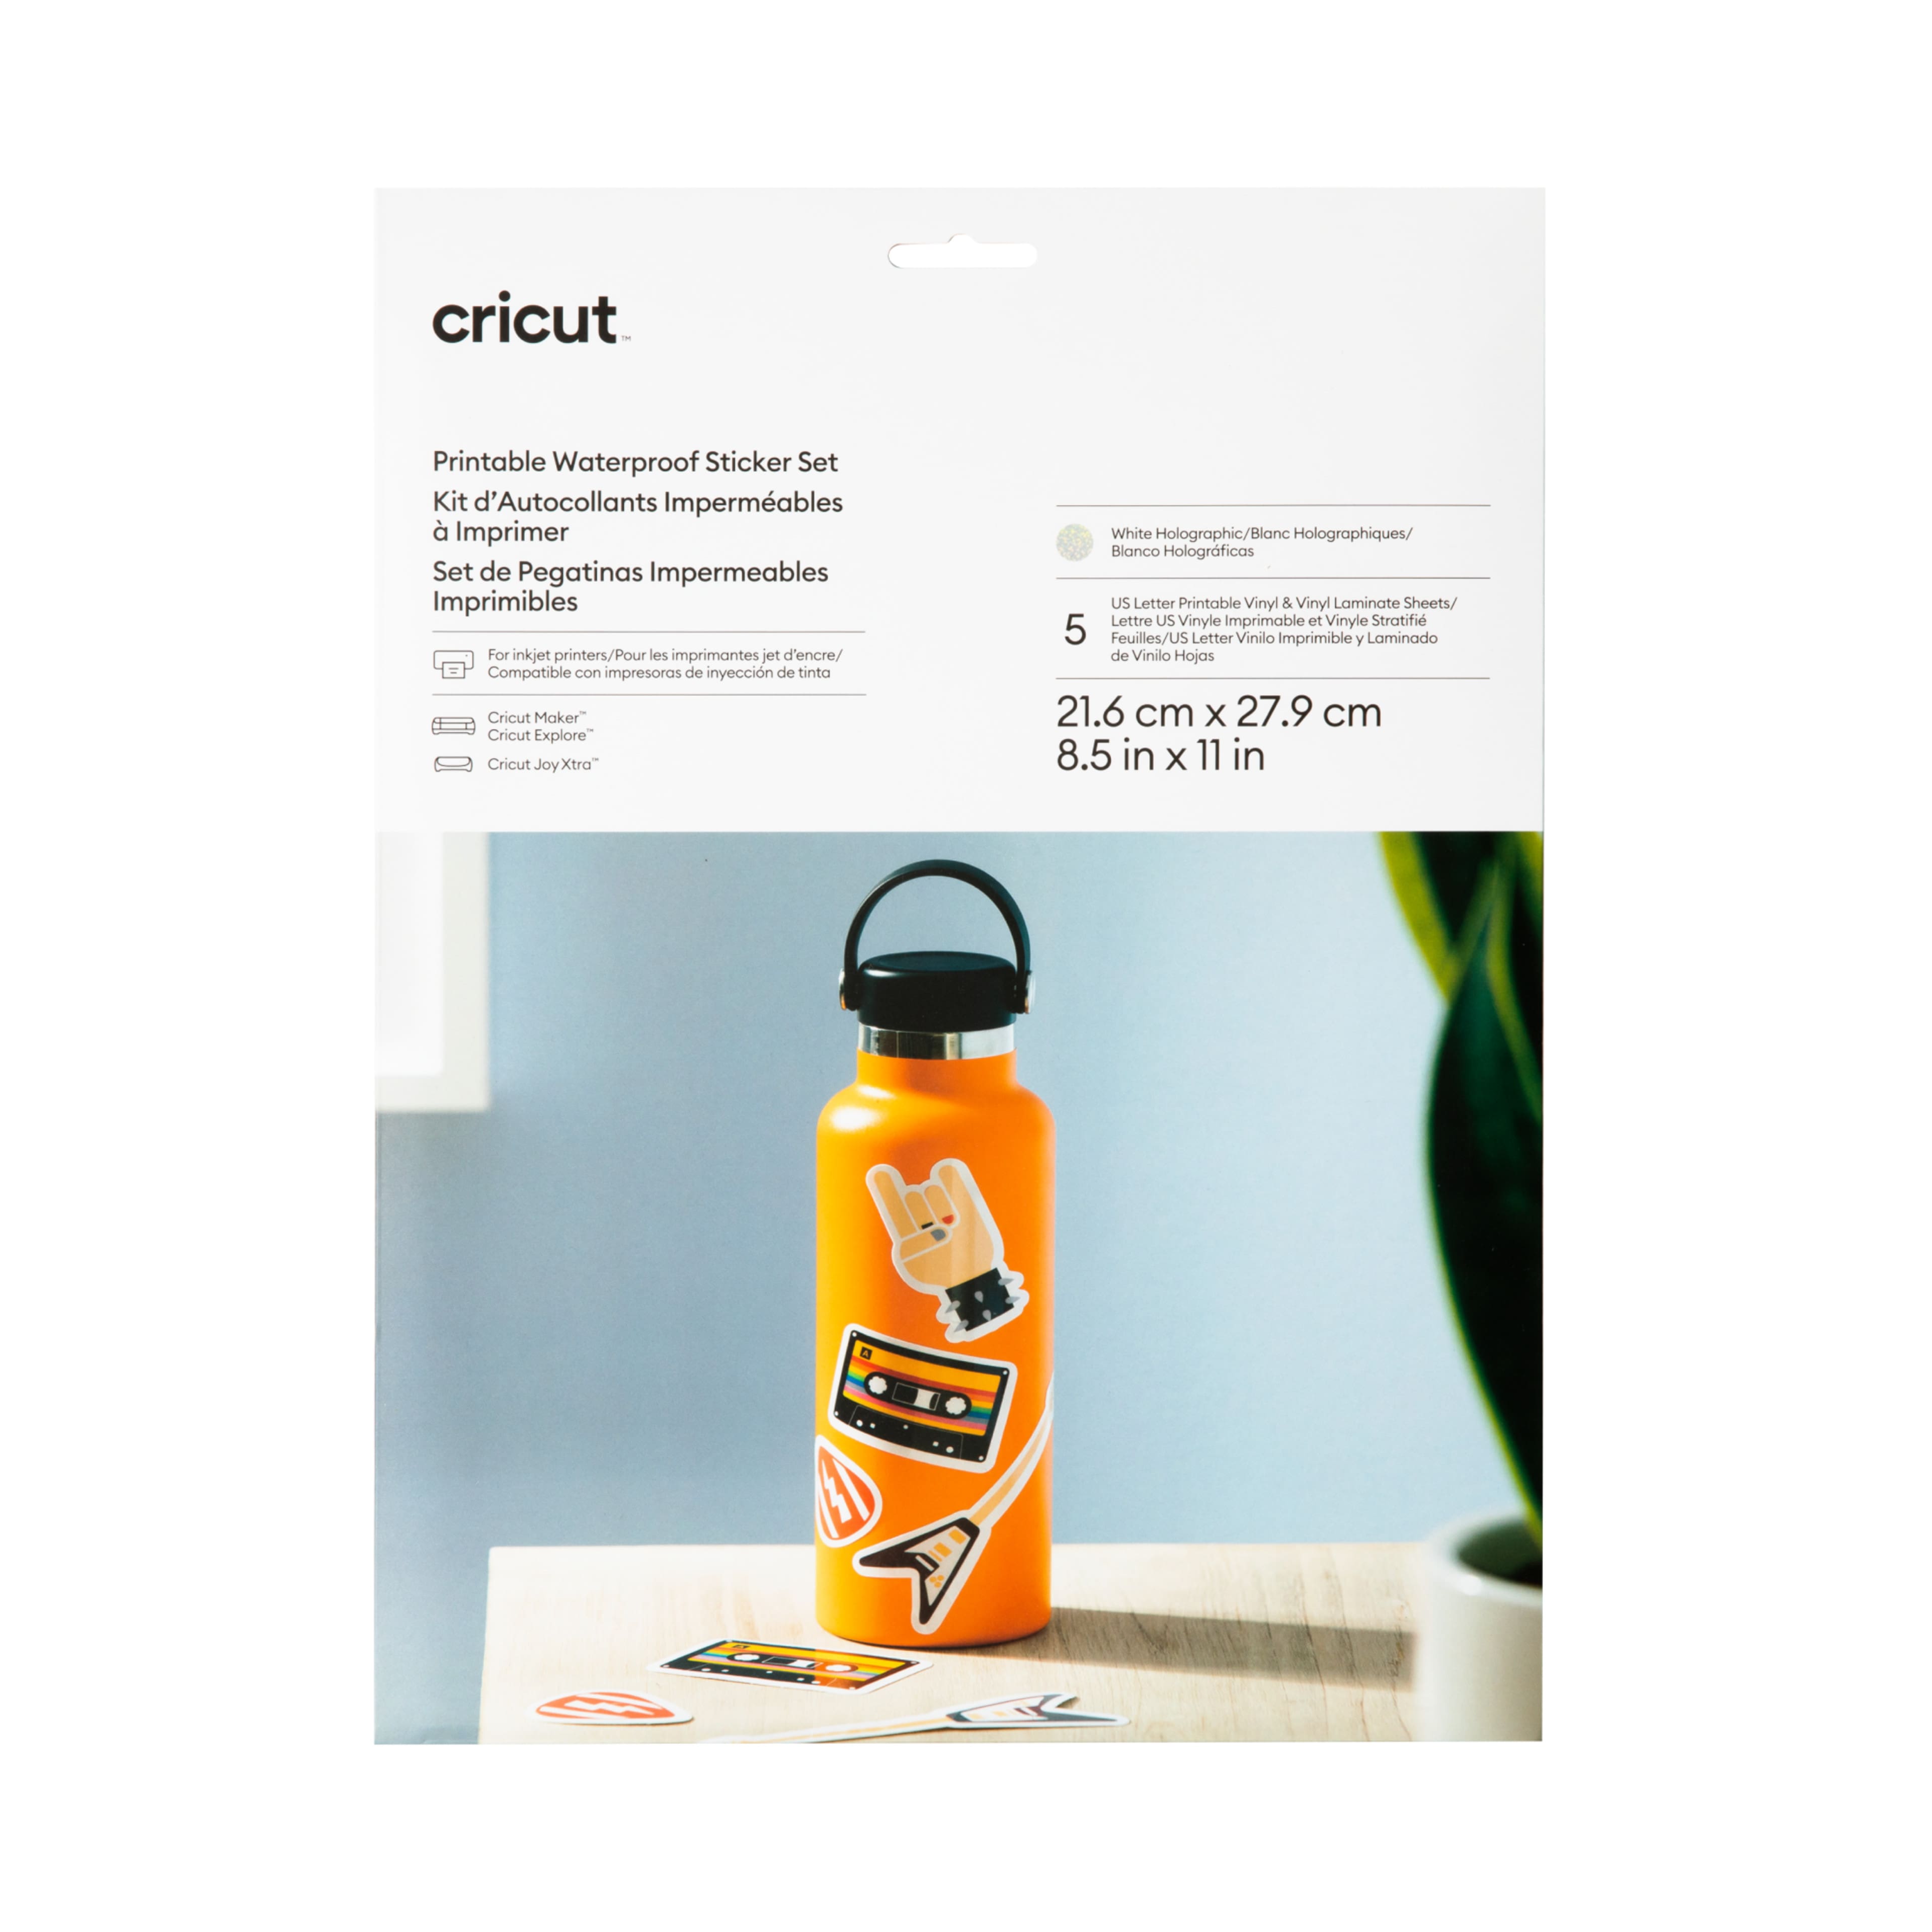 Cricut Printable Iron-On For Light Fabrics - US Letter (5 ct